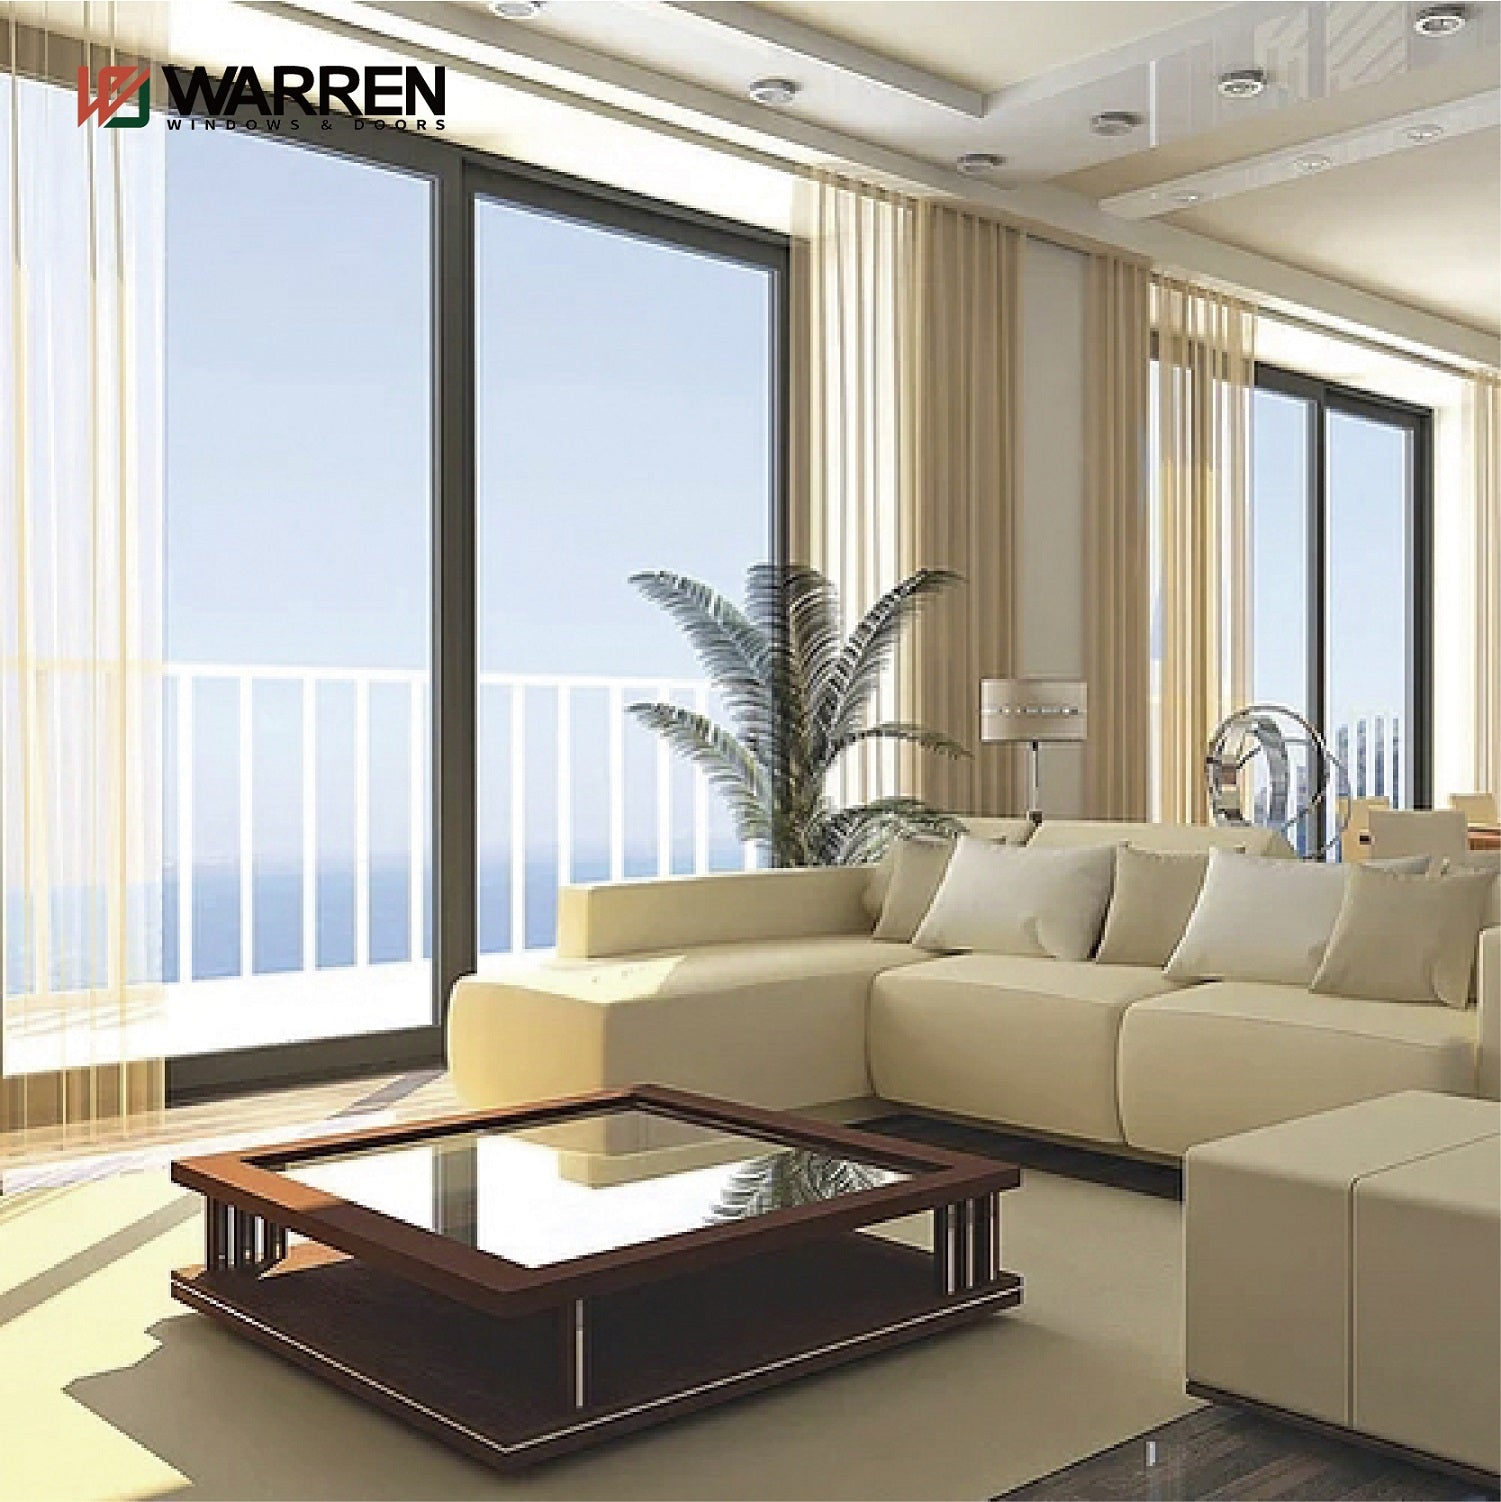 Warren Factory Price Manufacturer Supplier Swing Casement Window Aluminum Alloy System Window